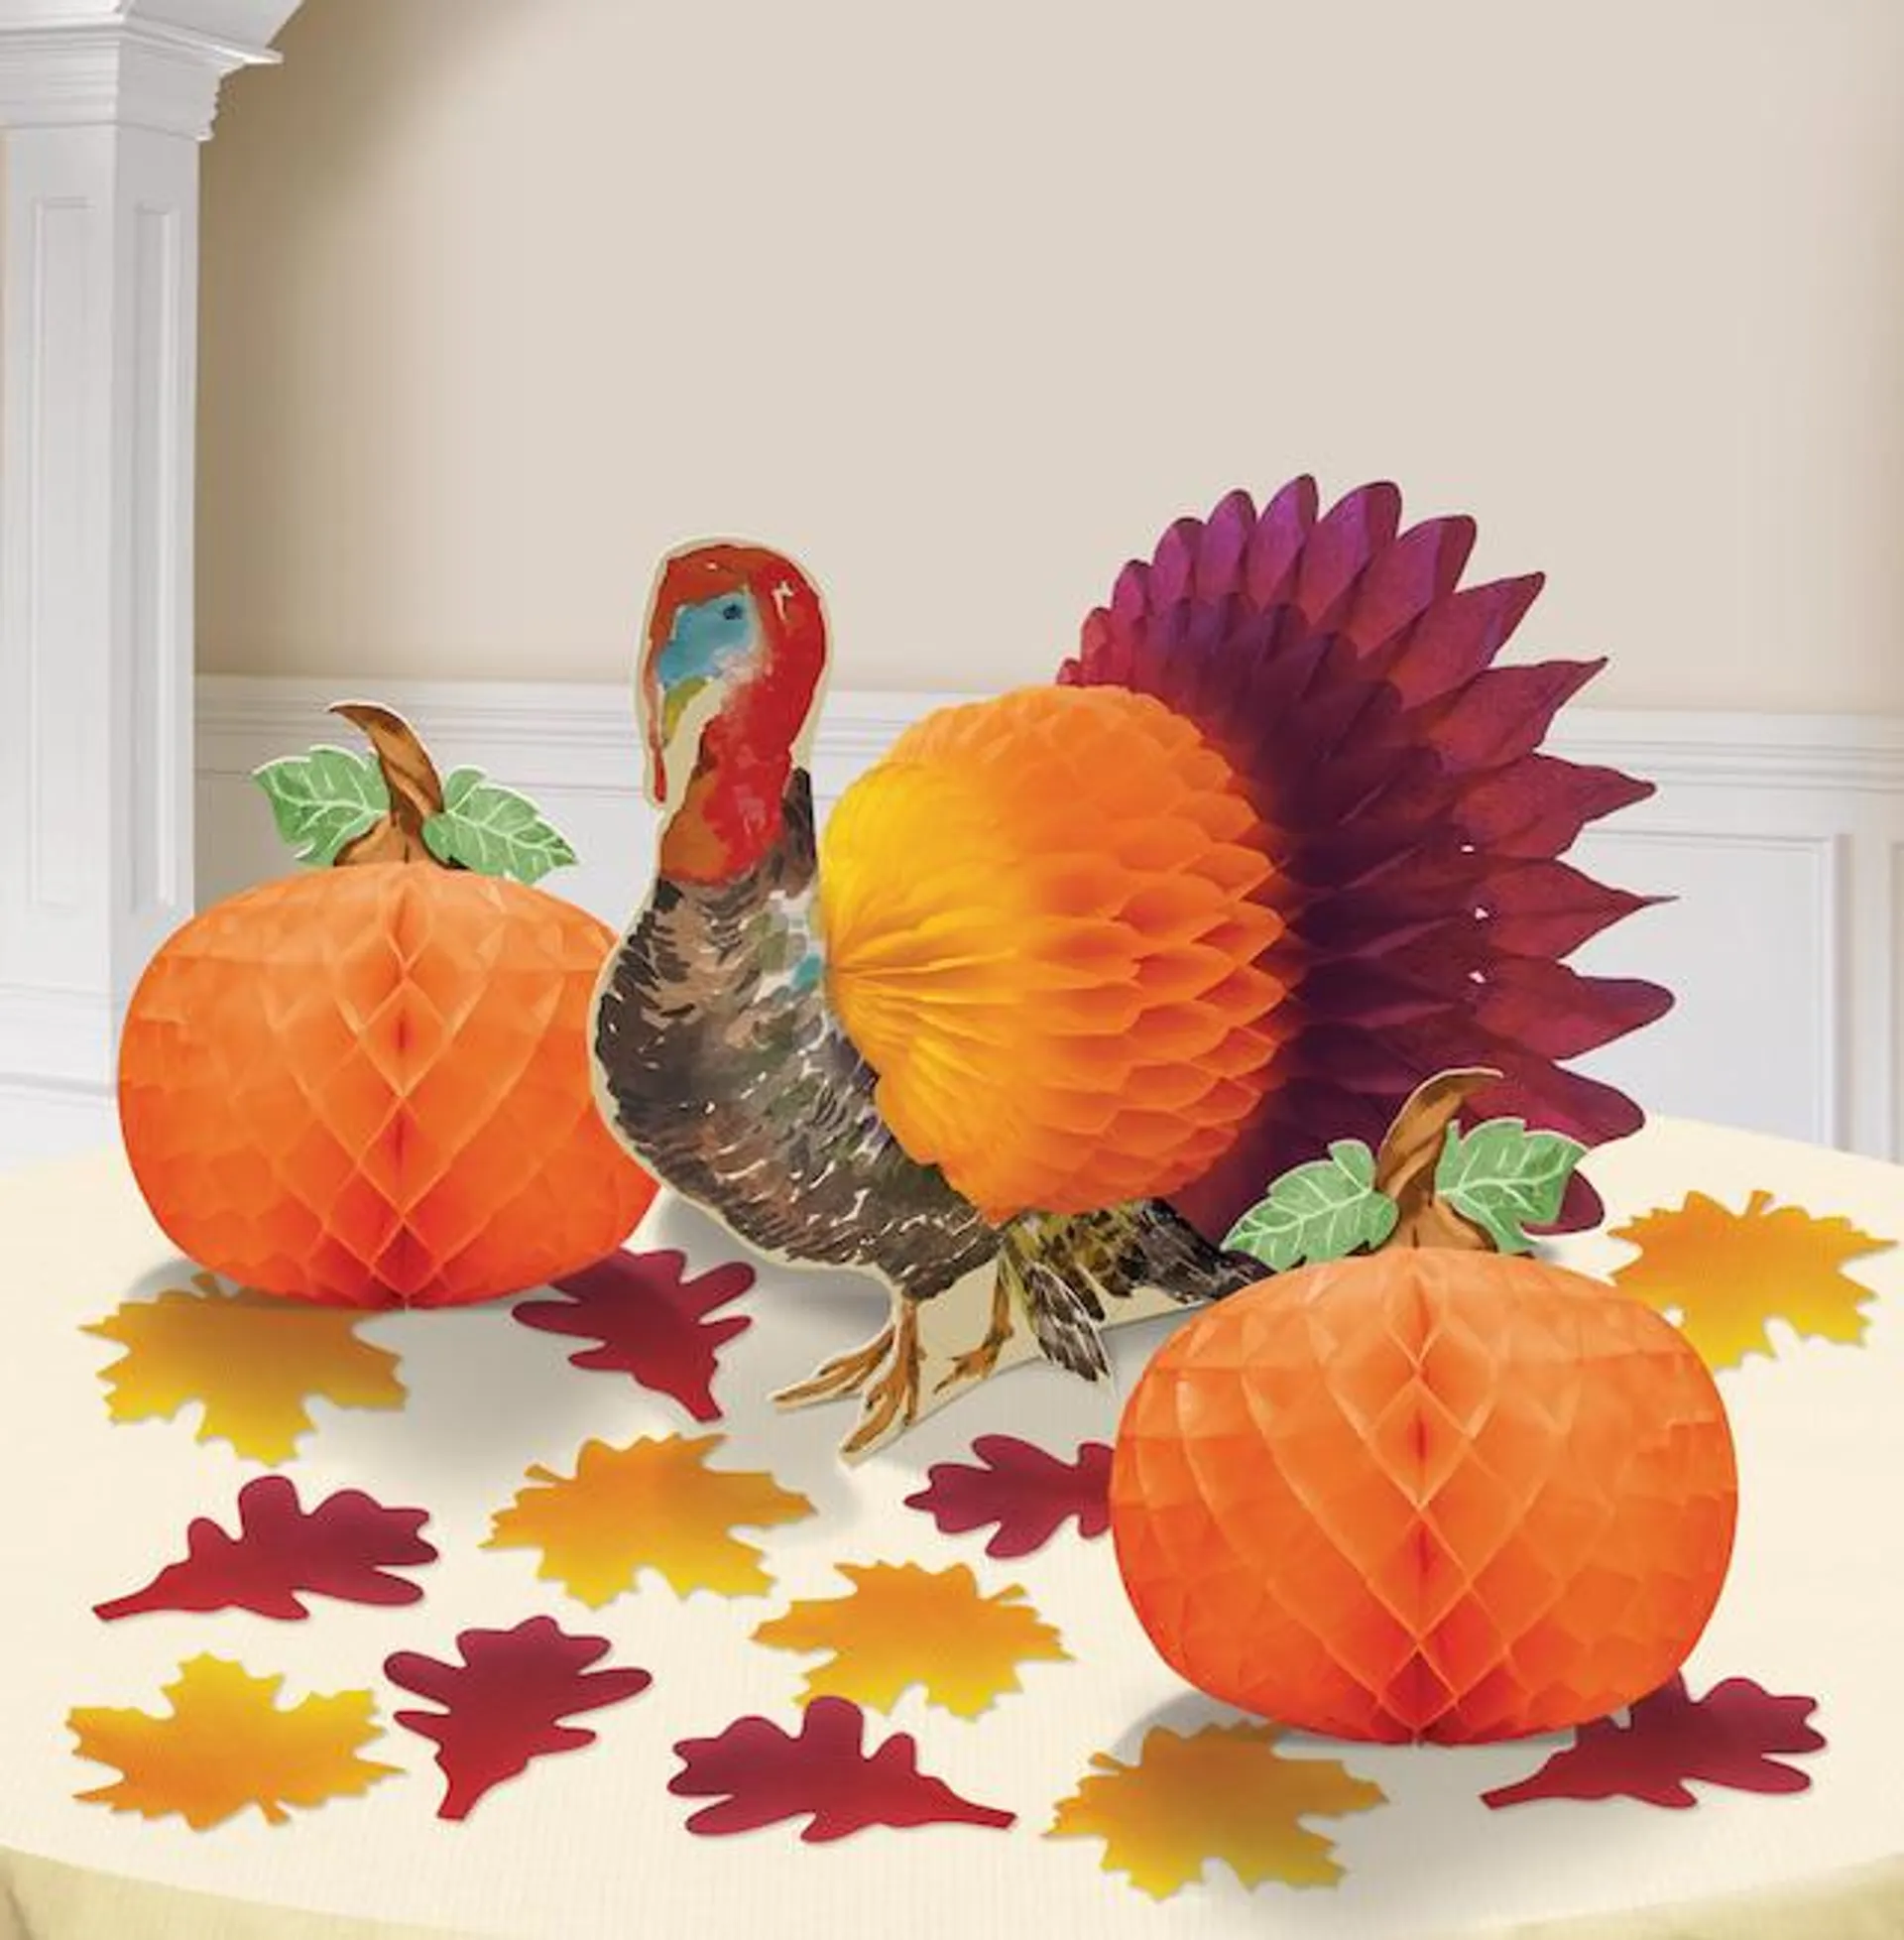 Turkey & Jack-O'-Lanterns Honeycomb Table Decorating Kit, Multi-Coloured, Indoor Decoration for Thanksgiving